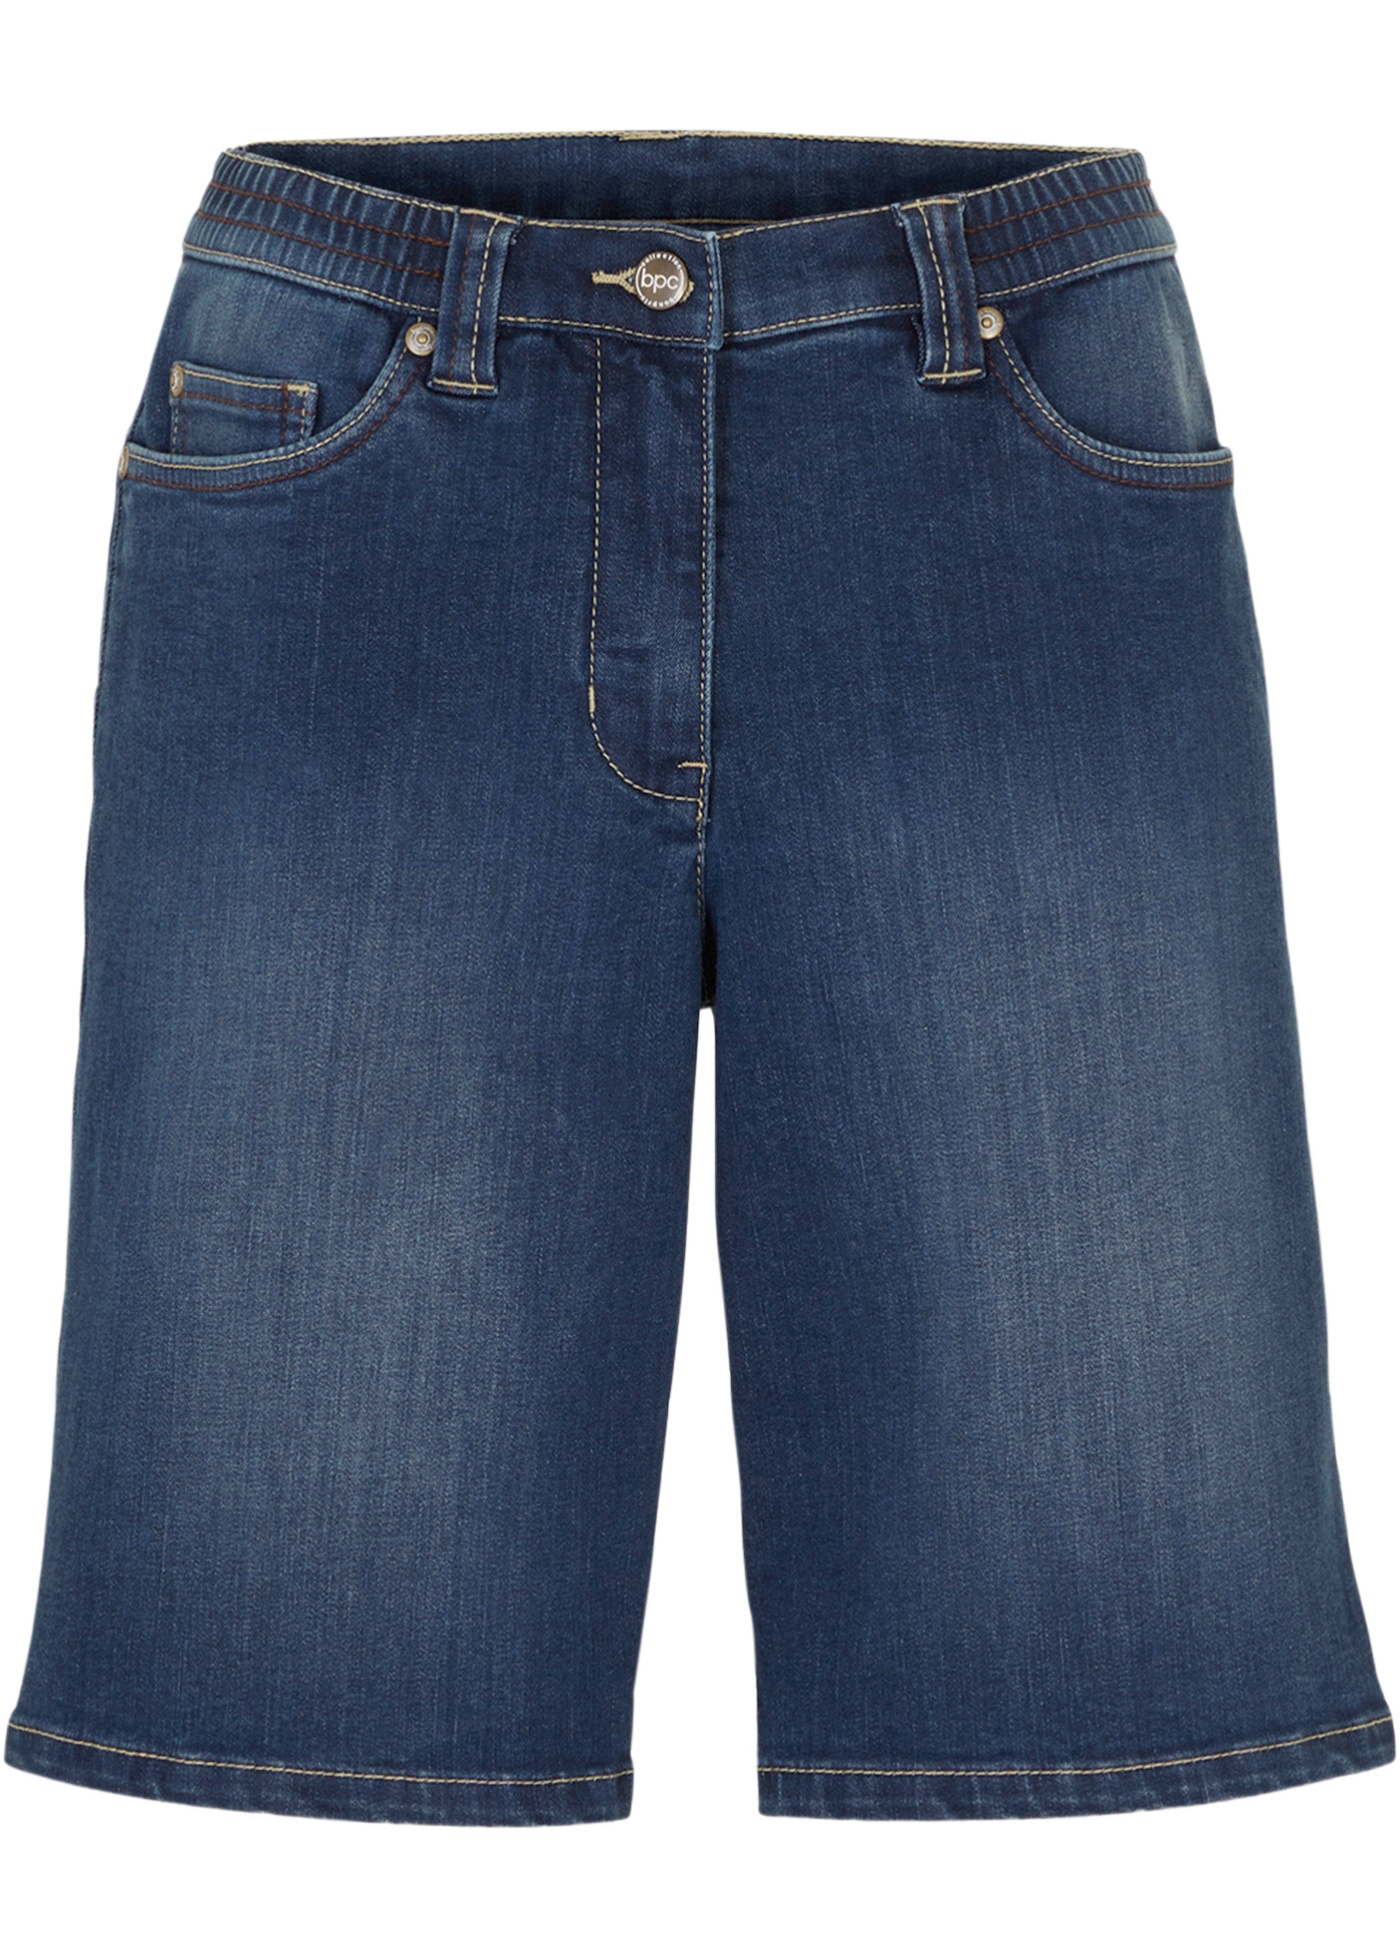 bermuda en jean extensible avec taille confortable